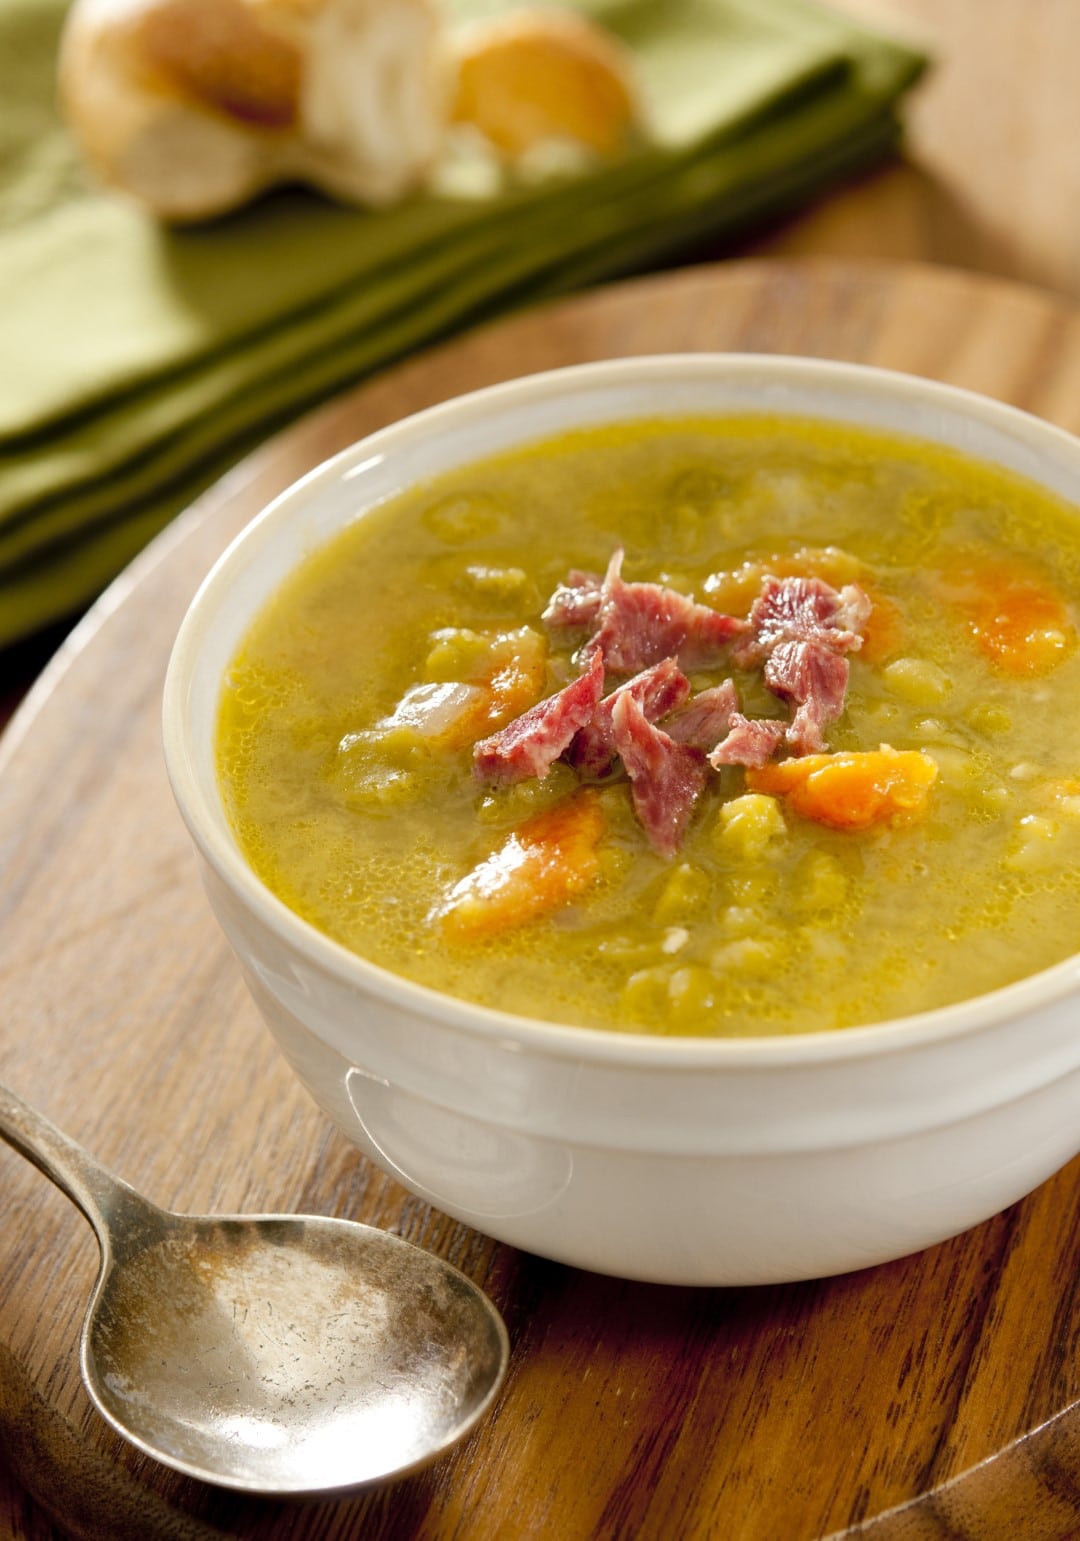 https://media.healthyfood.com/wp-content/uploads/2017/03/Crockpot-pea-and-ham-soup.jpg